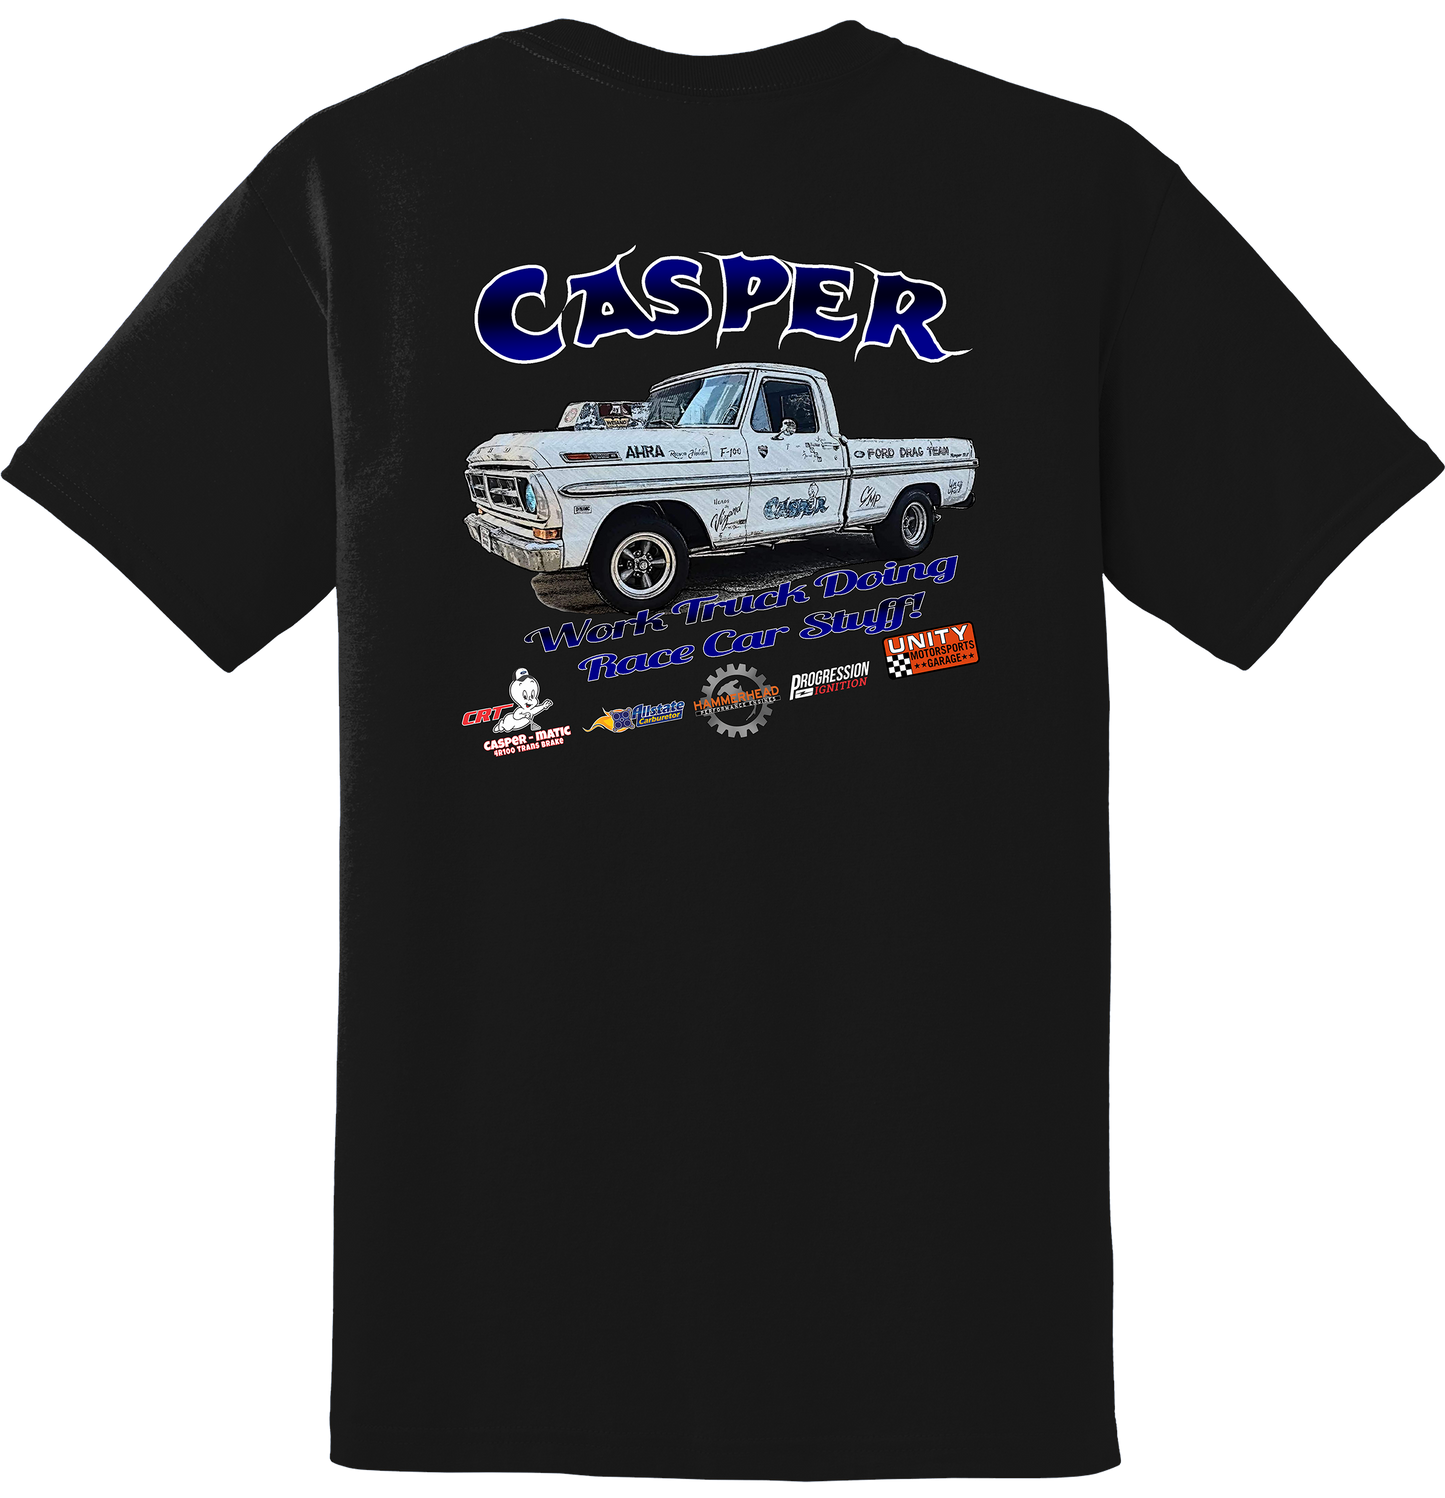 Unity Motorsports Garage "Casper" Tee